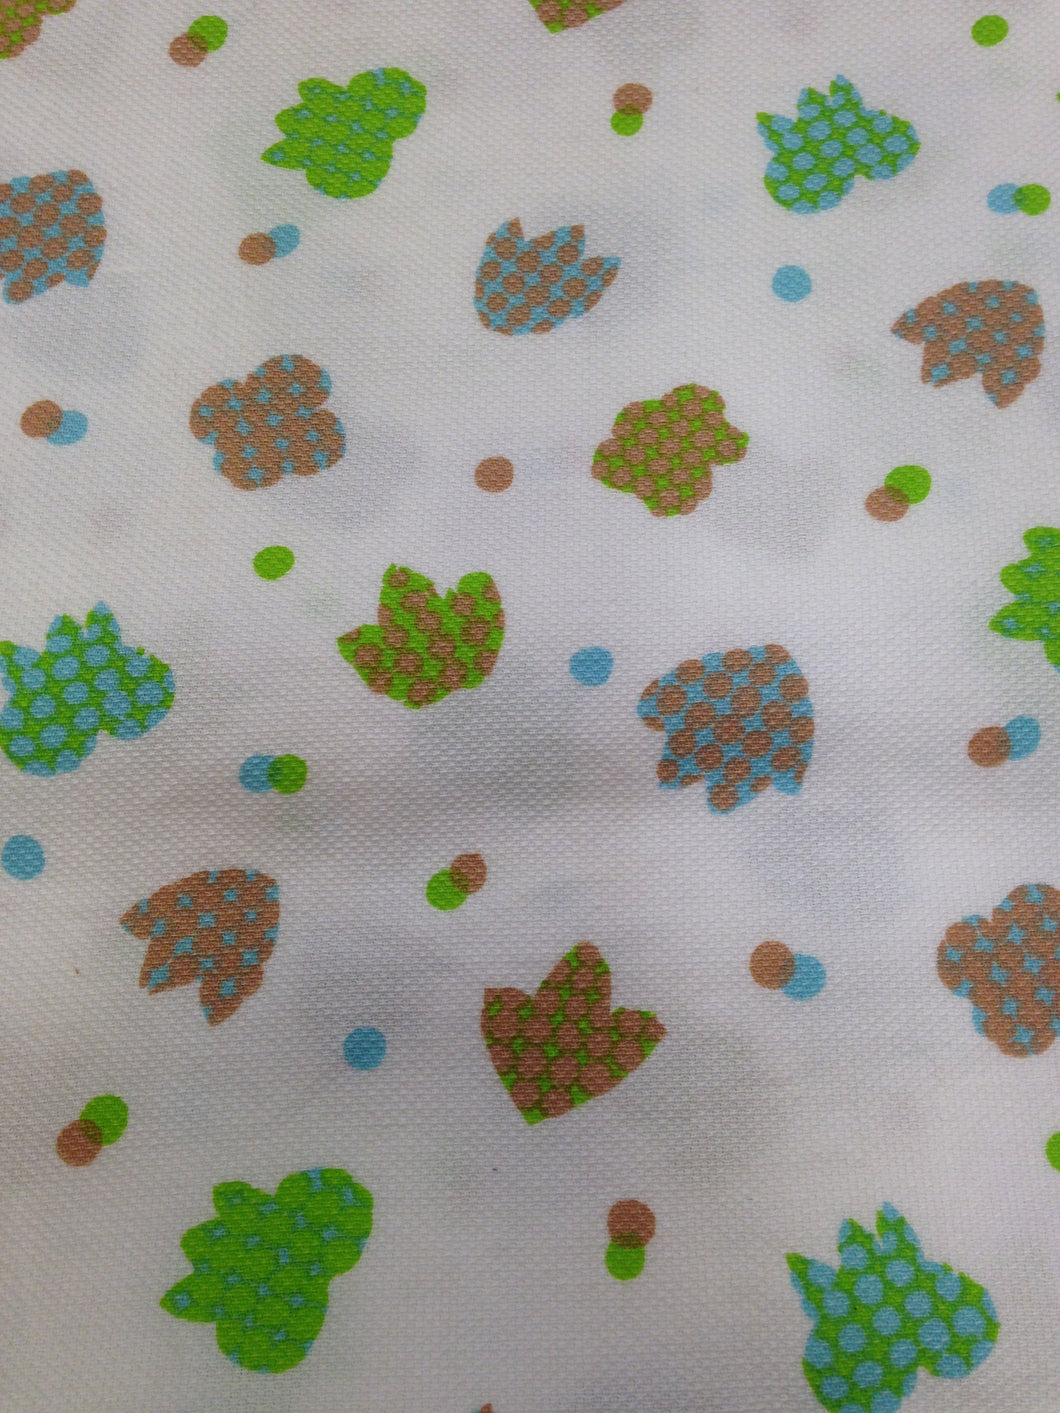 Printed Pique Vintage Fabric - 1 Yard - Leaf Print / Pique fabric / Vintage Pique / Green Brown Pique / Floral Pique / Pique Yardage / Brown Blue